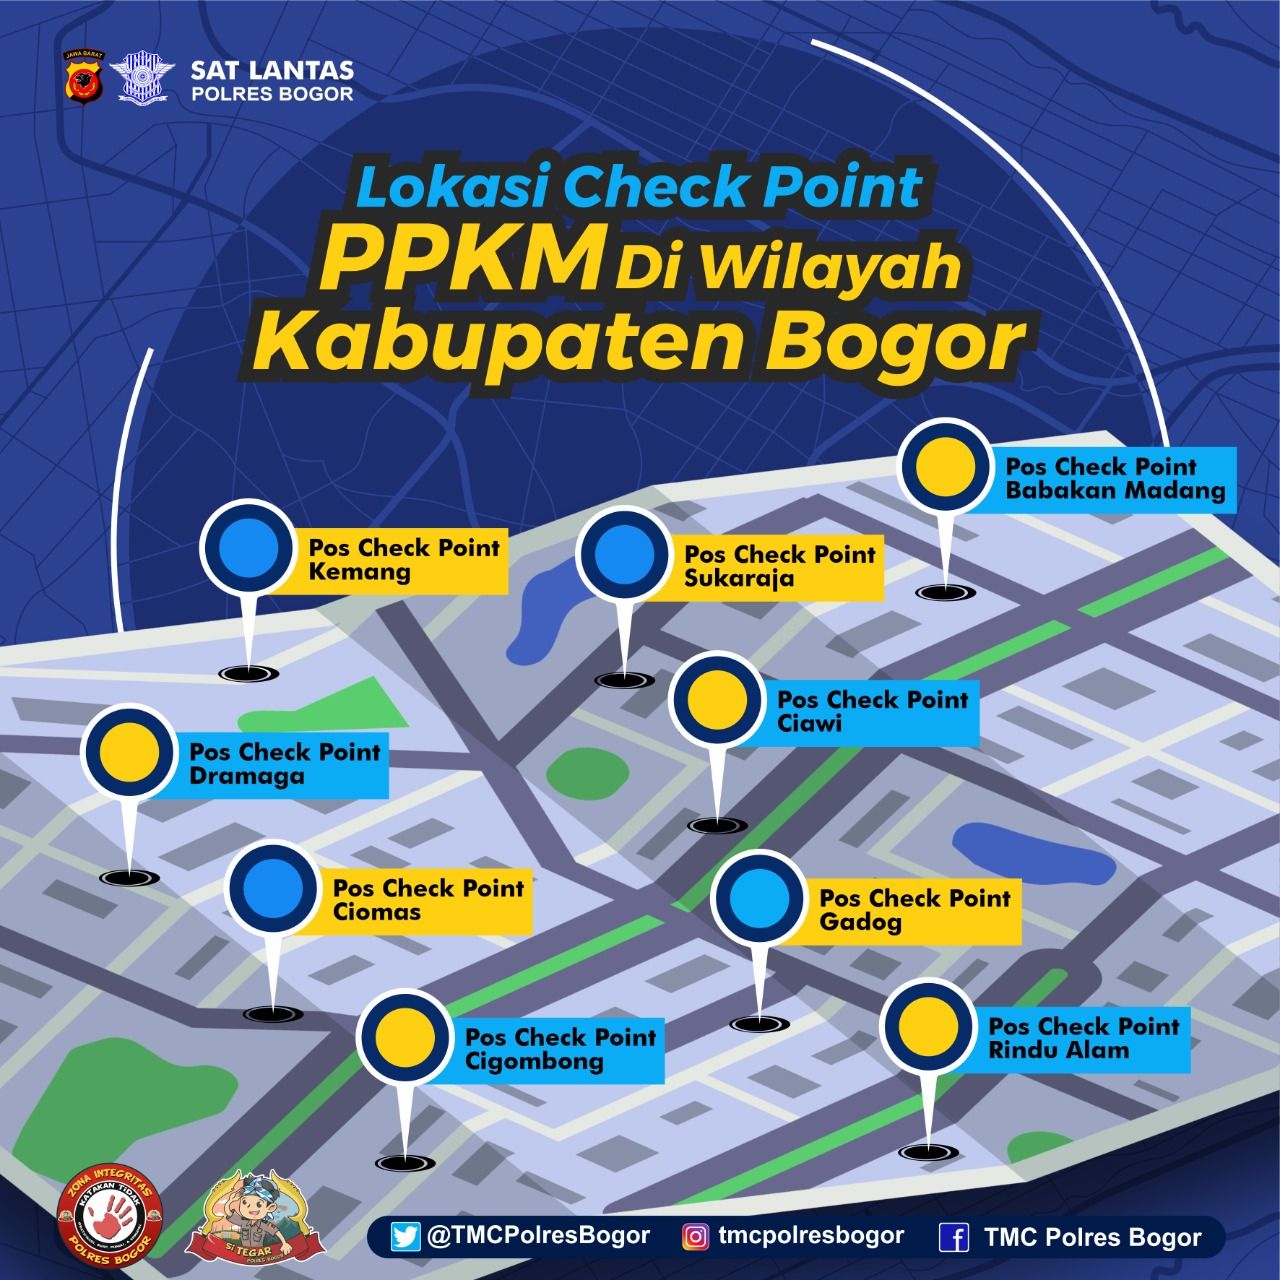 Lokasi Check Point PPKM di wilayah Kabupaten Bogor